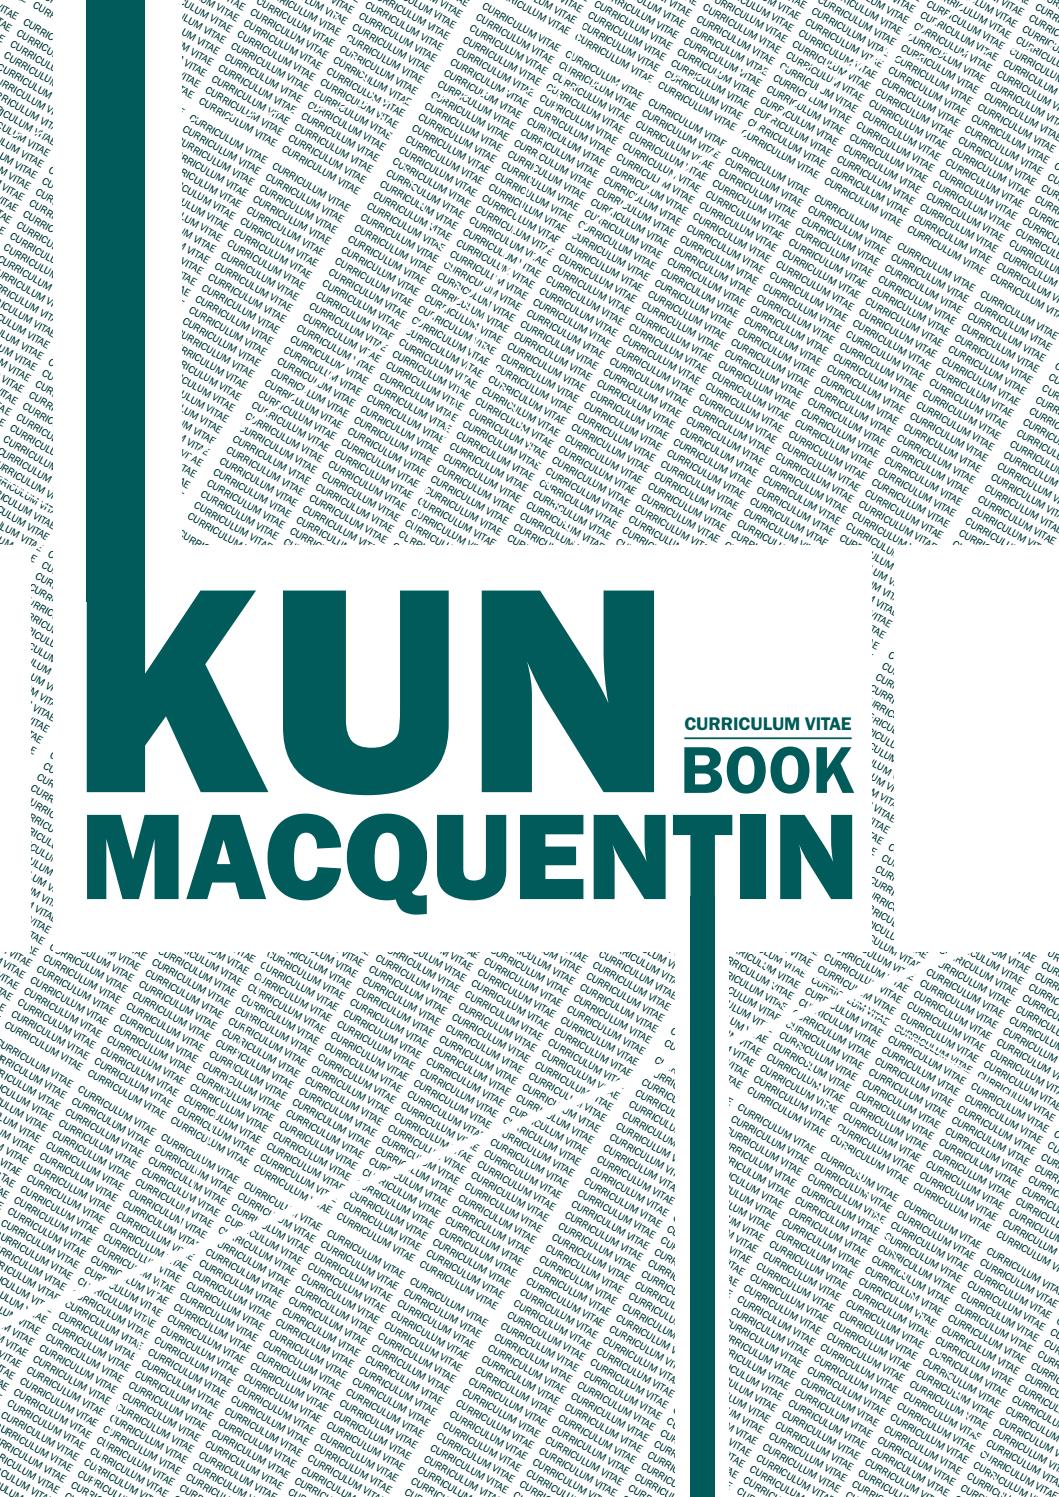 Serre De Jardin Polycarbonate Frais Kun Macquentin Book Cv by Kuncquentin issuu